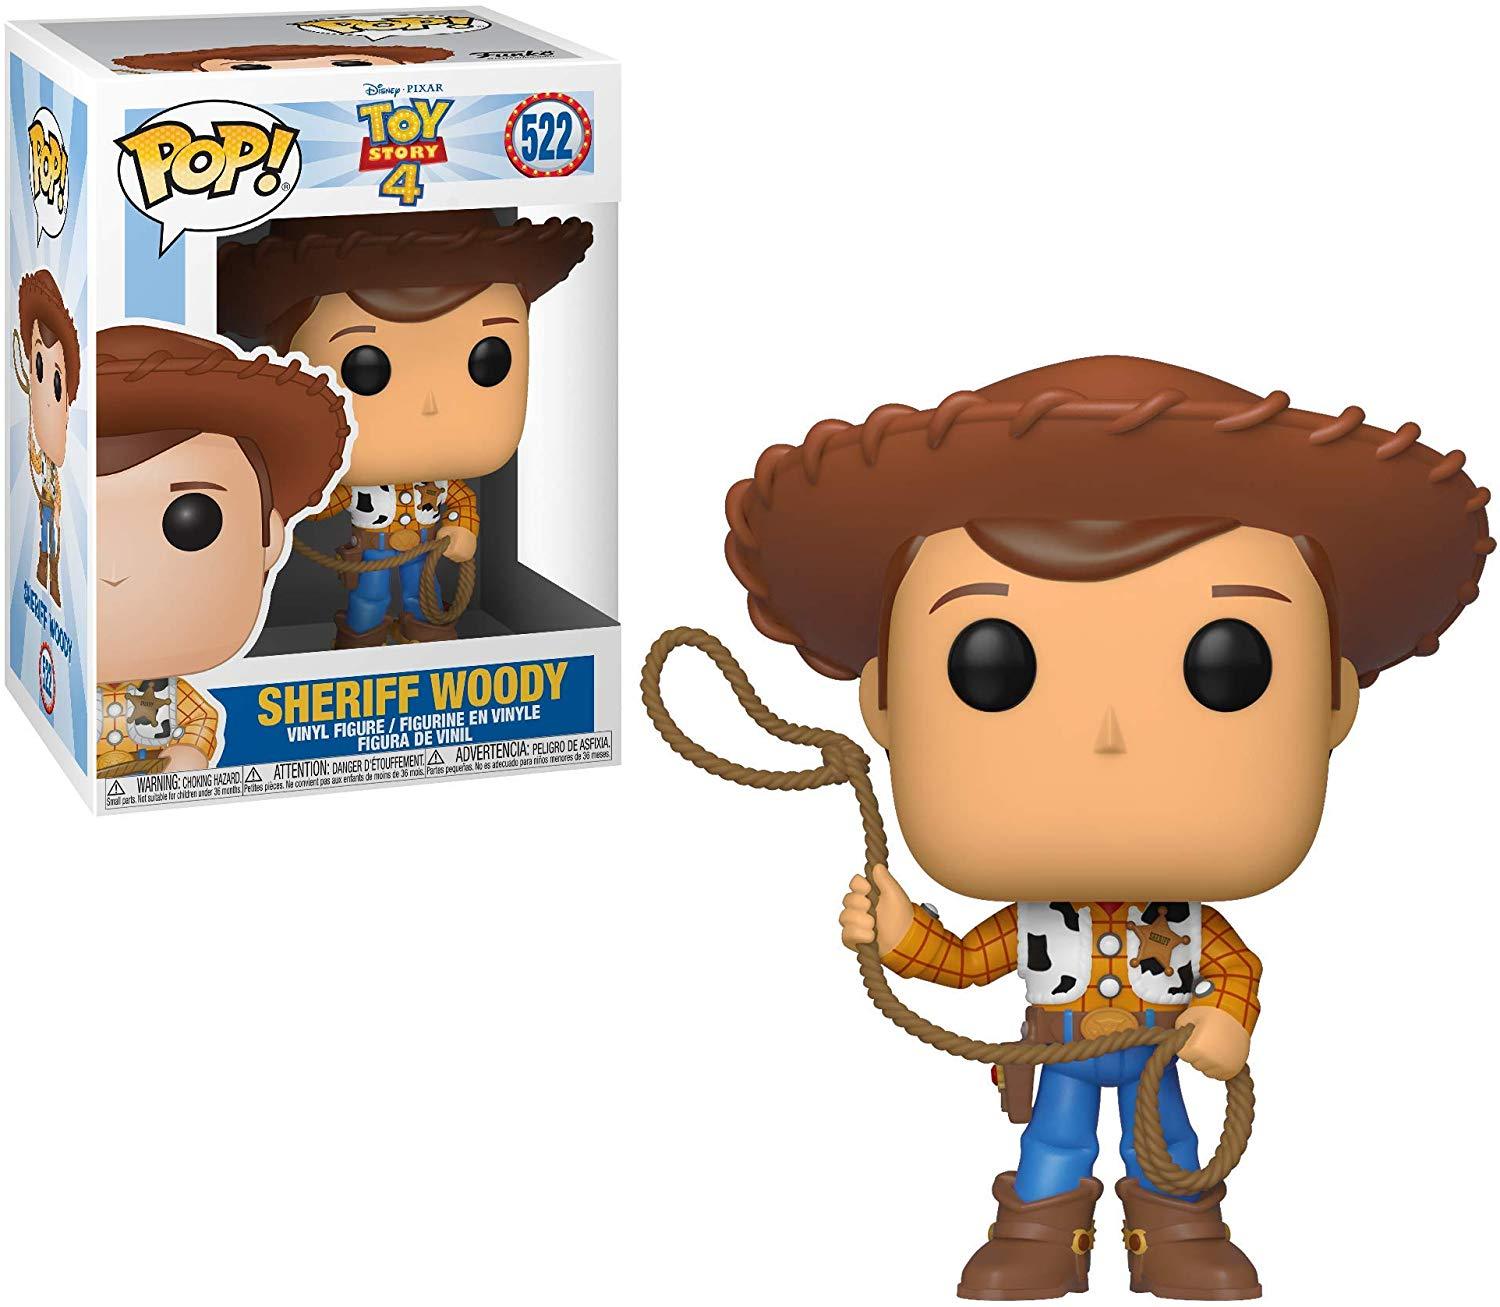 522 Toy Story 4: Sheriff Woody